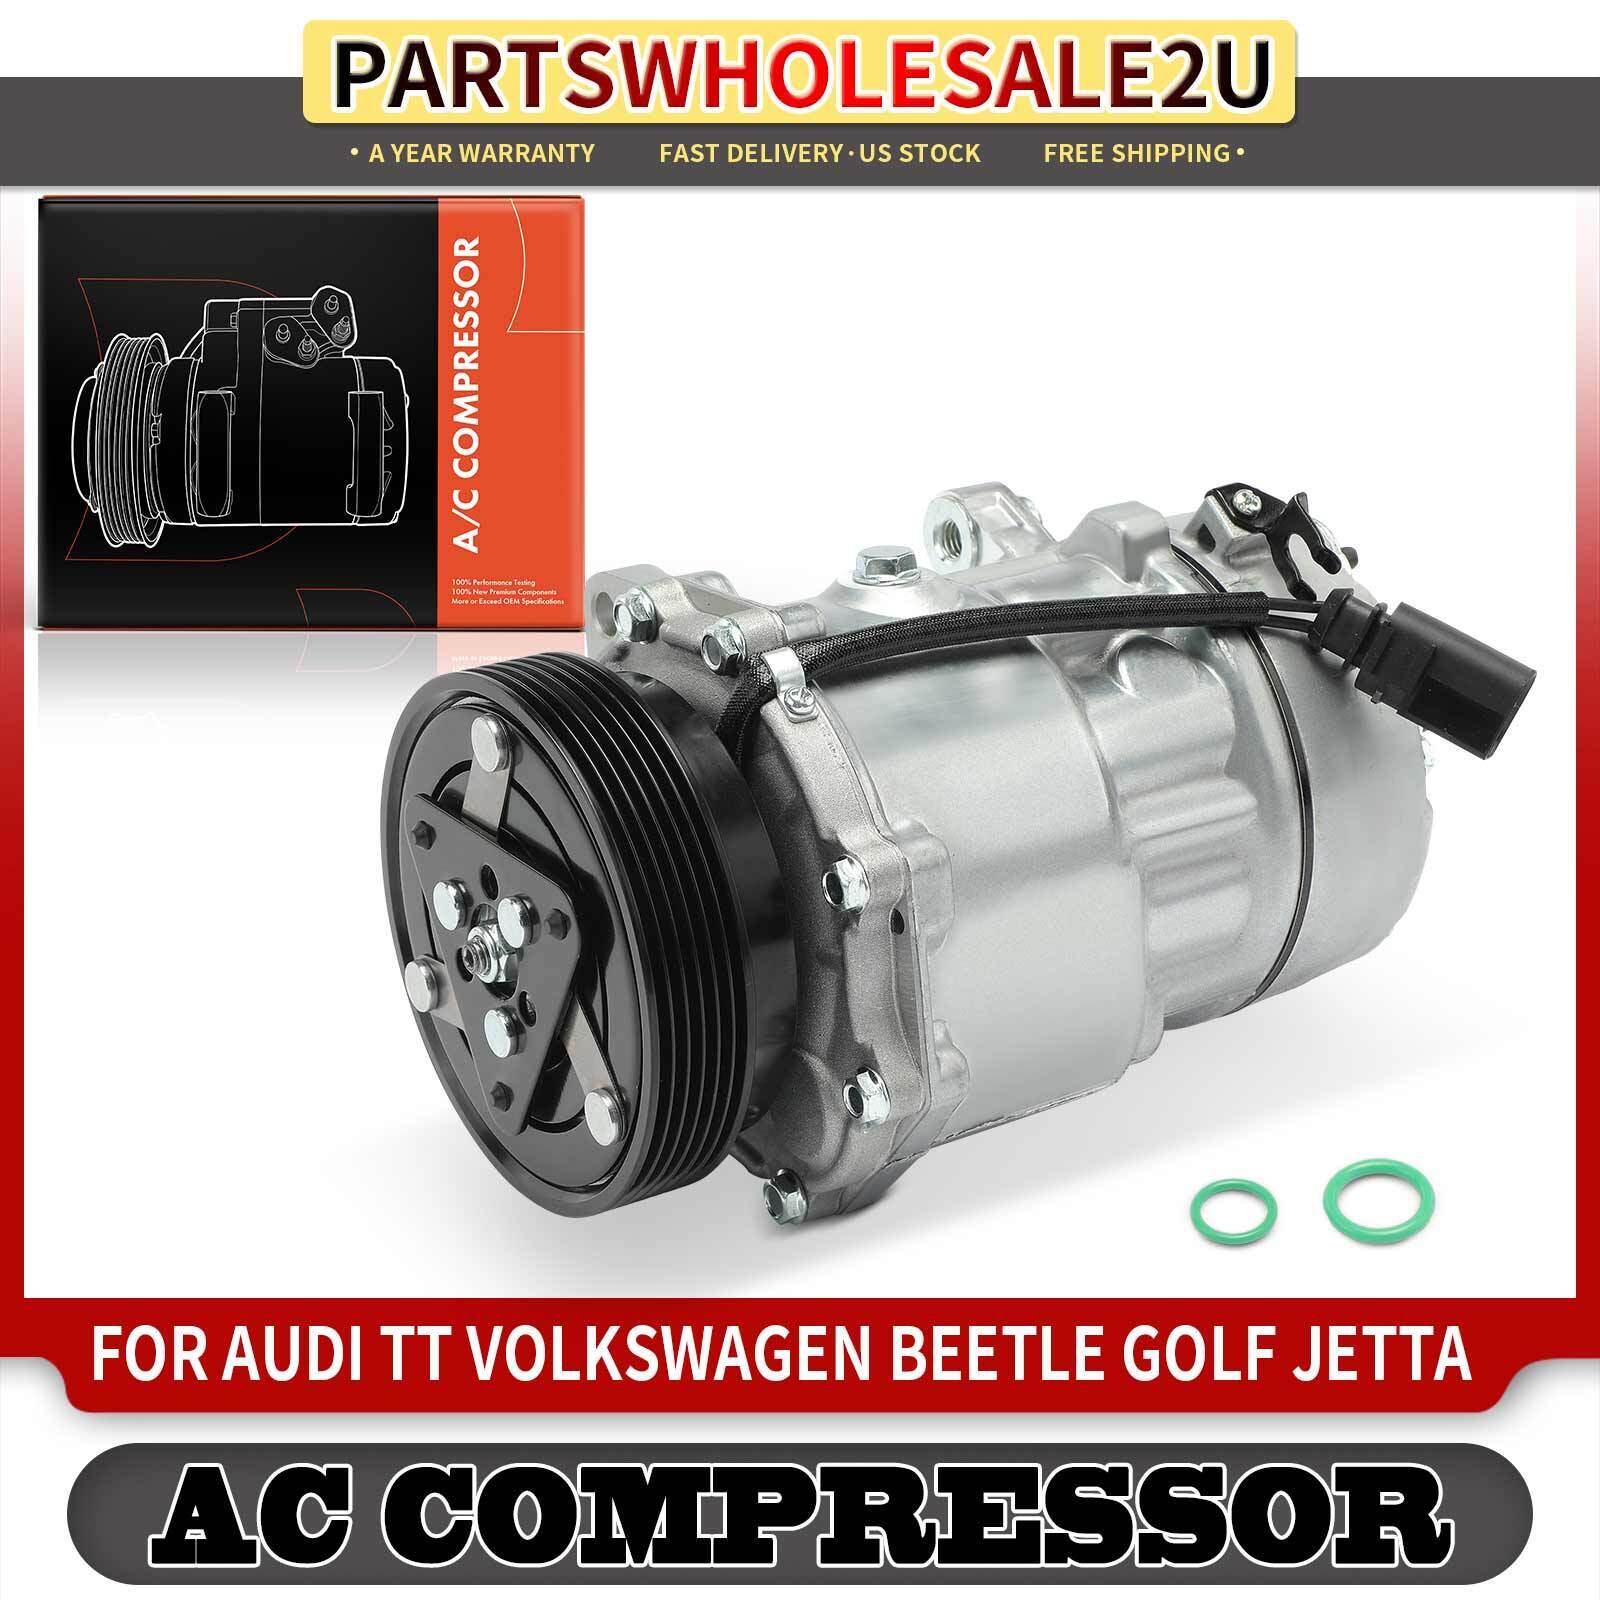 AC Compressor with SD7V16 Compressor for Audi A3 TT VW Beetle Golf Jetta Seat